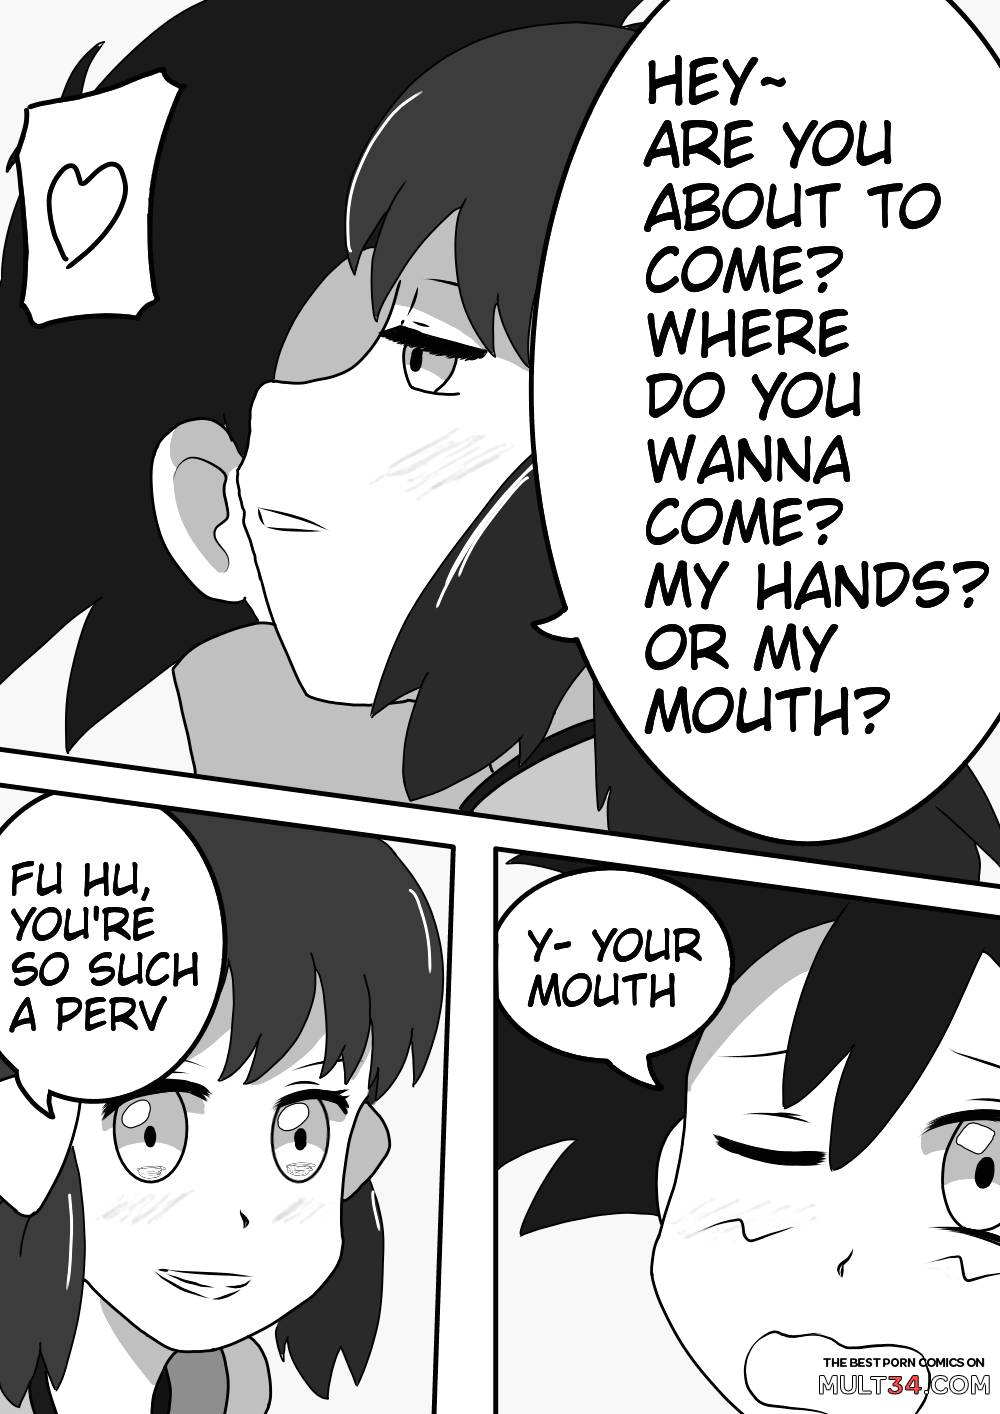 Satoshi and Koharu's Daily talk 3 page 6